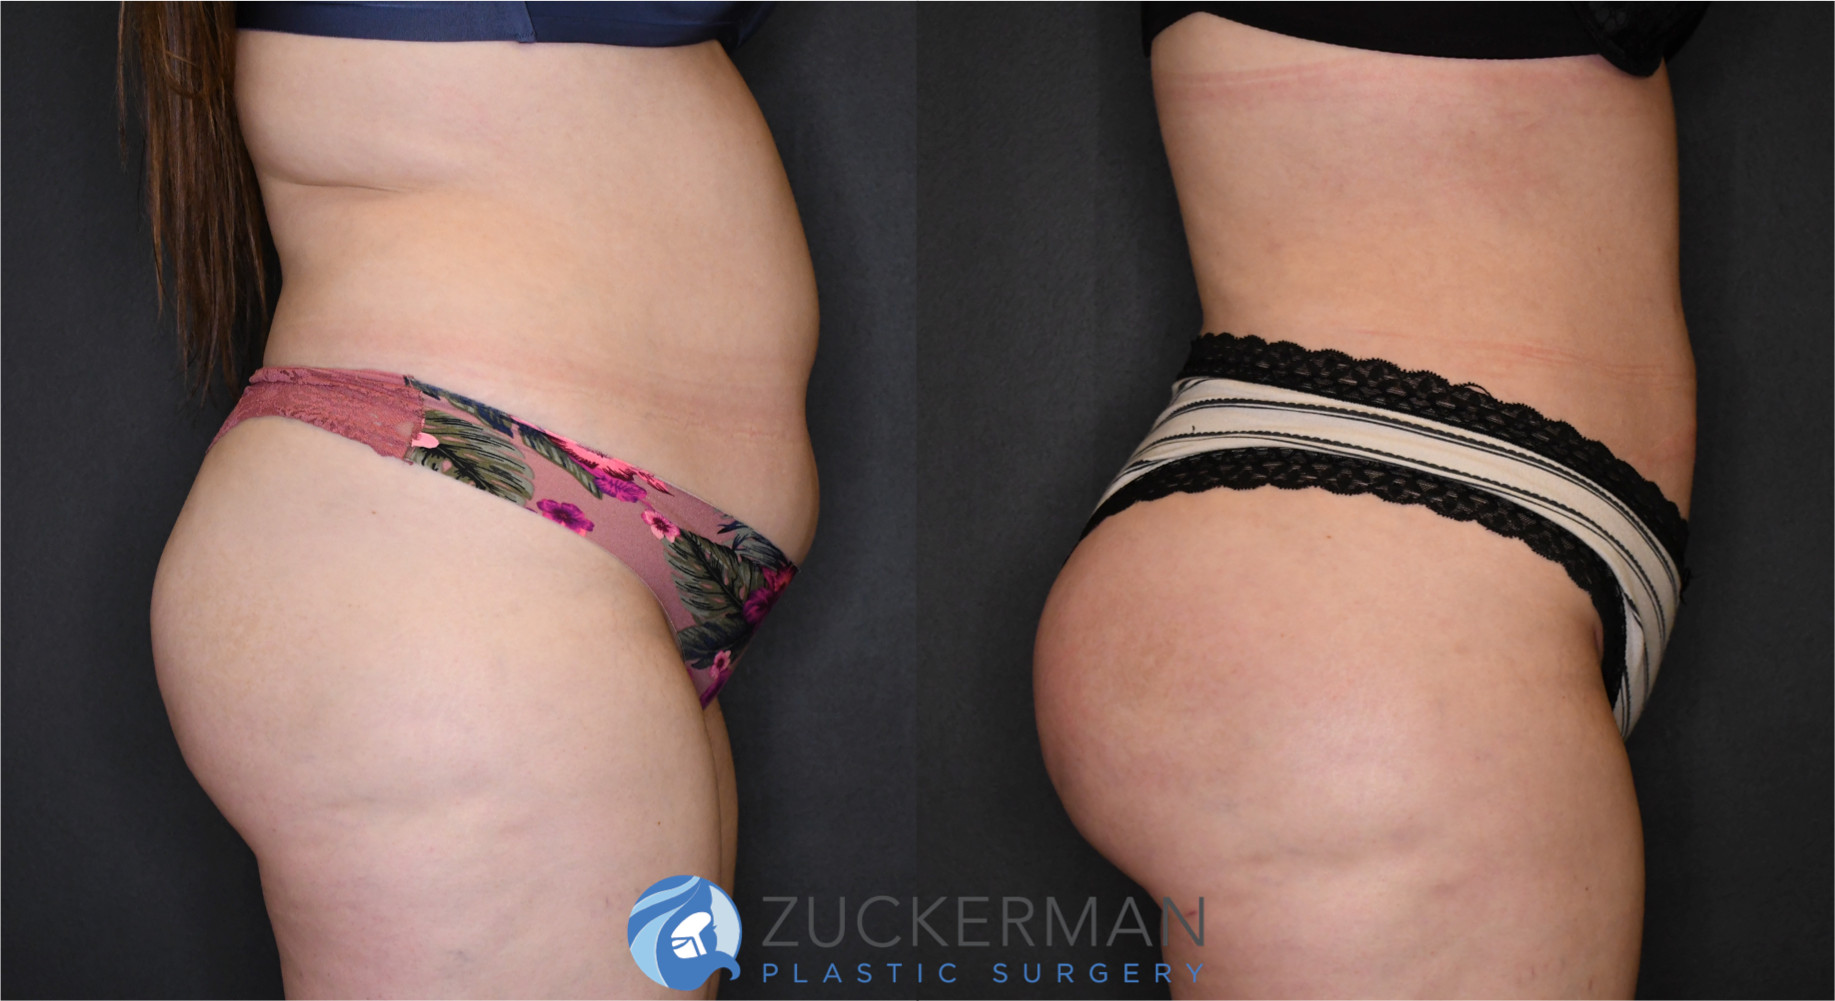 brazilian butt lift, buttock augmentation, bbl, before and after, joshua zuckerman, 10, right profile view